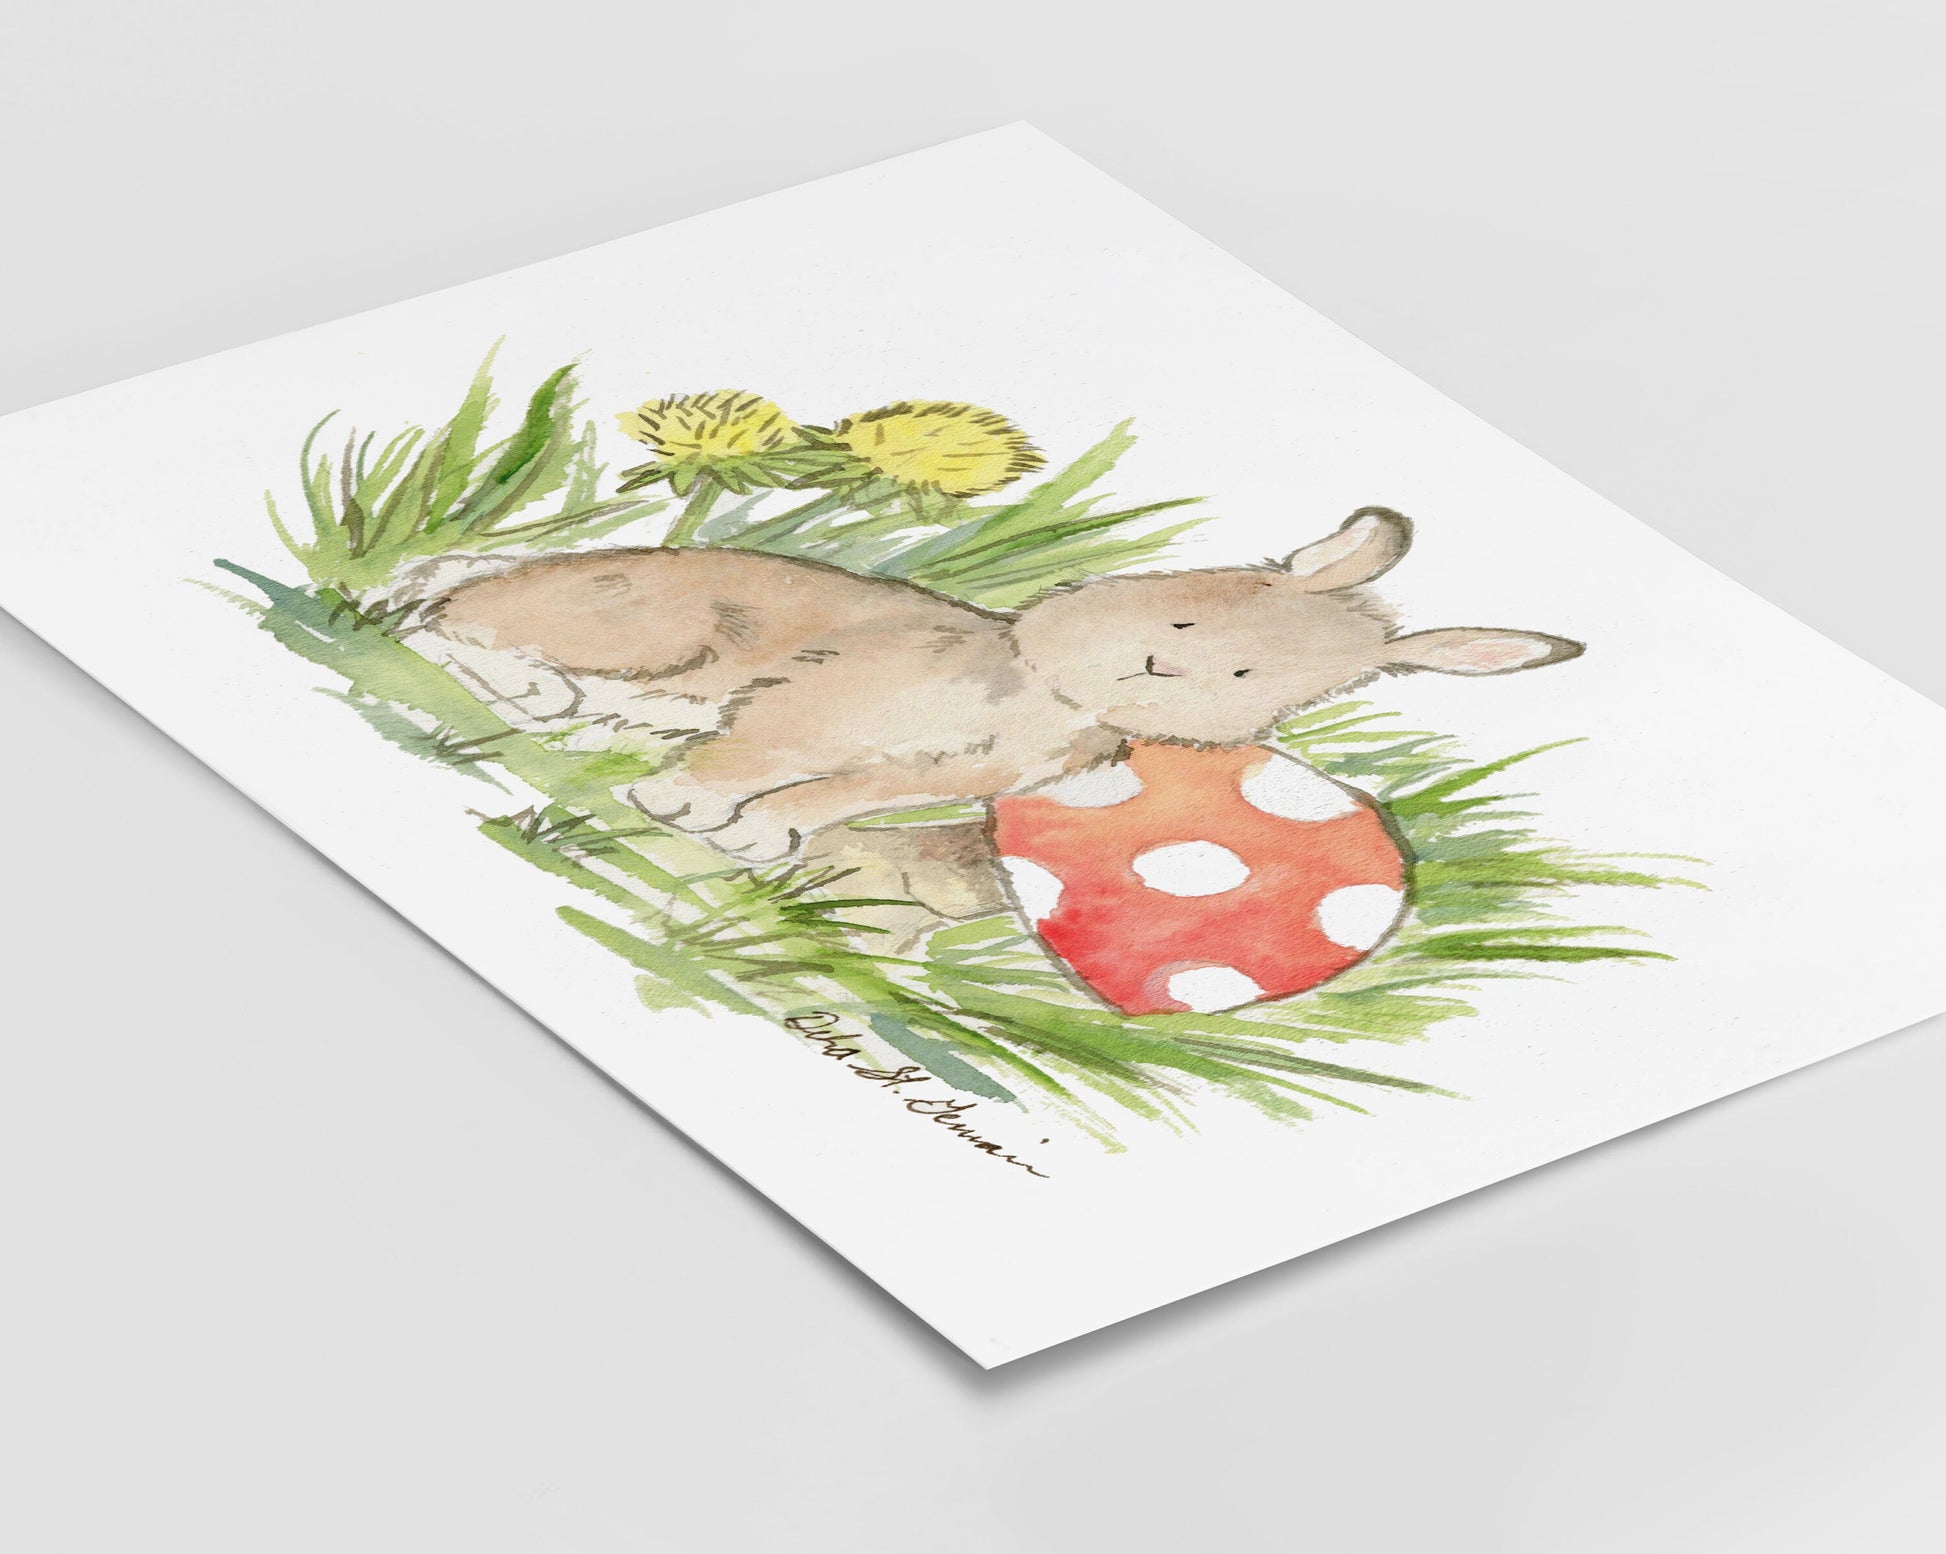 Woodland Nursery Art, Bunny with Mushroom Watercolor Print